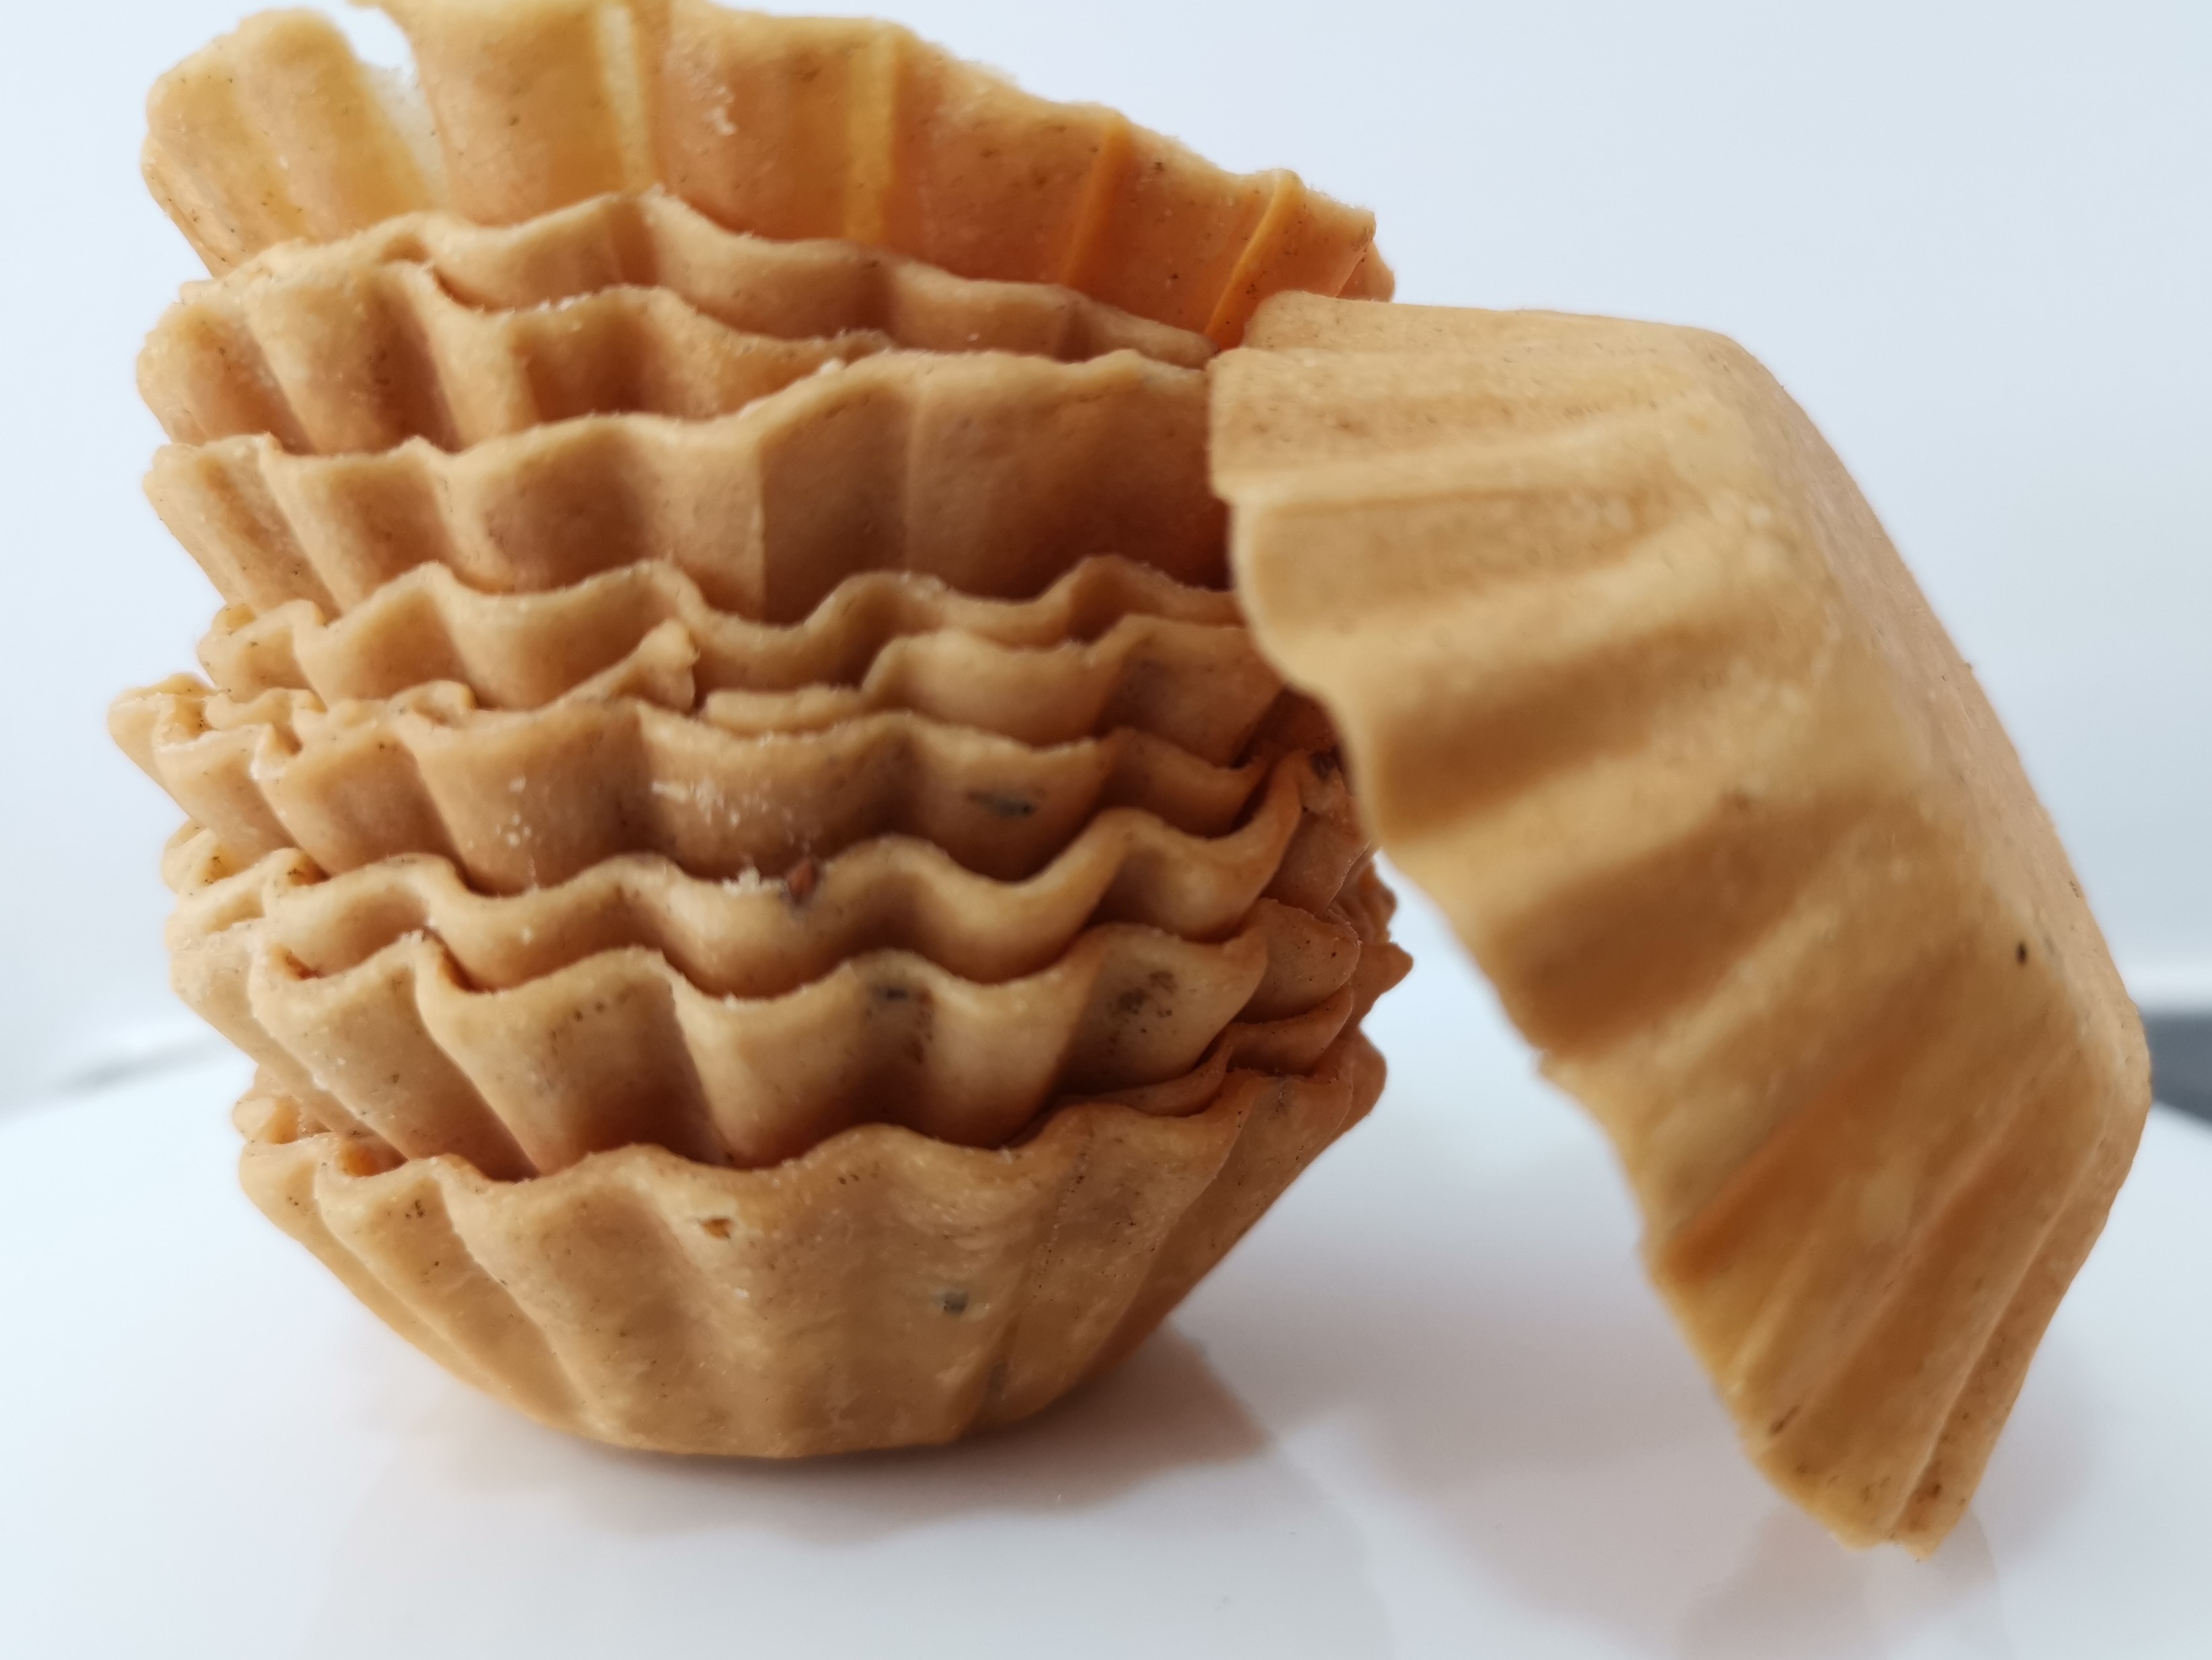 Rectángulo bicapa Atrevimiento Tart Shells - Canapes Chaat Basket | DIP Foods - Shop Online